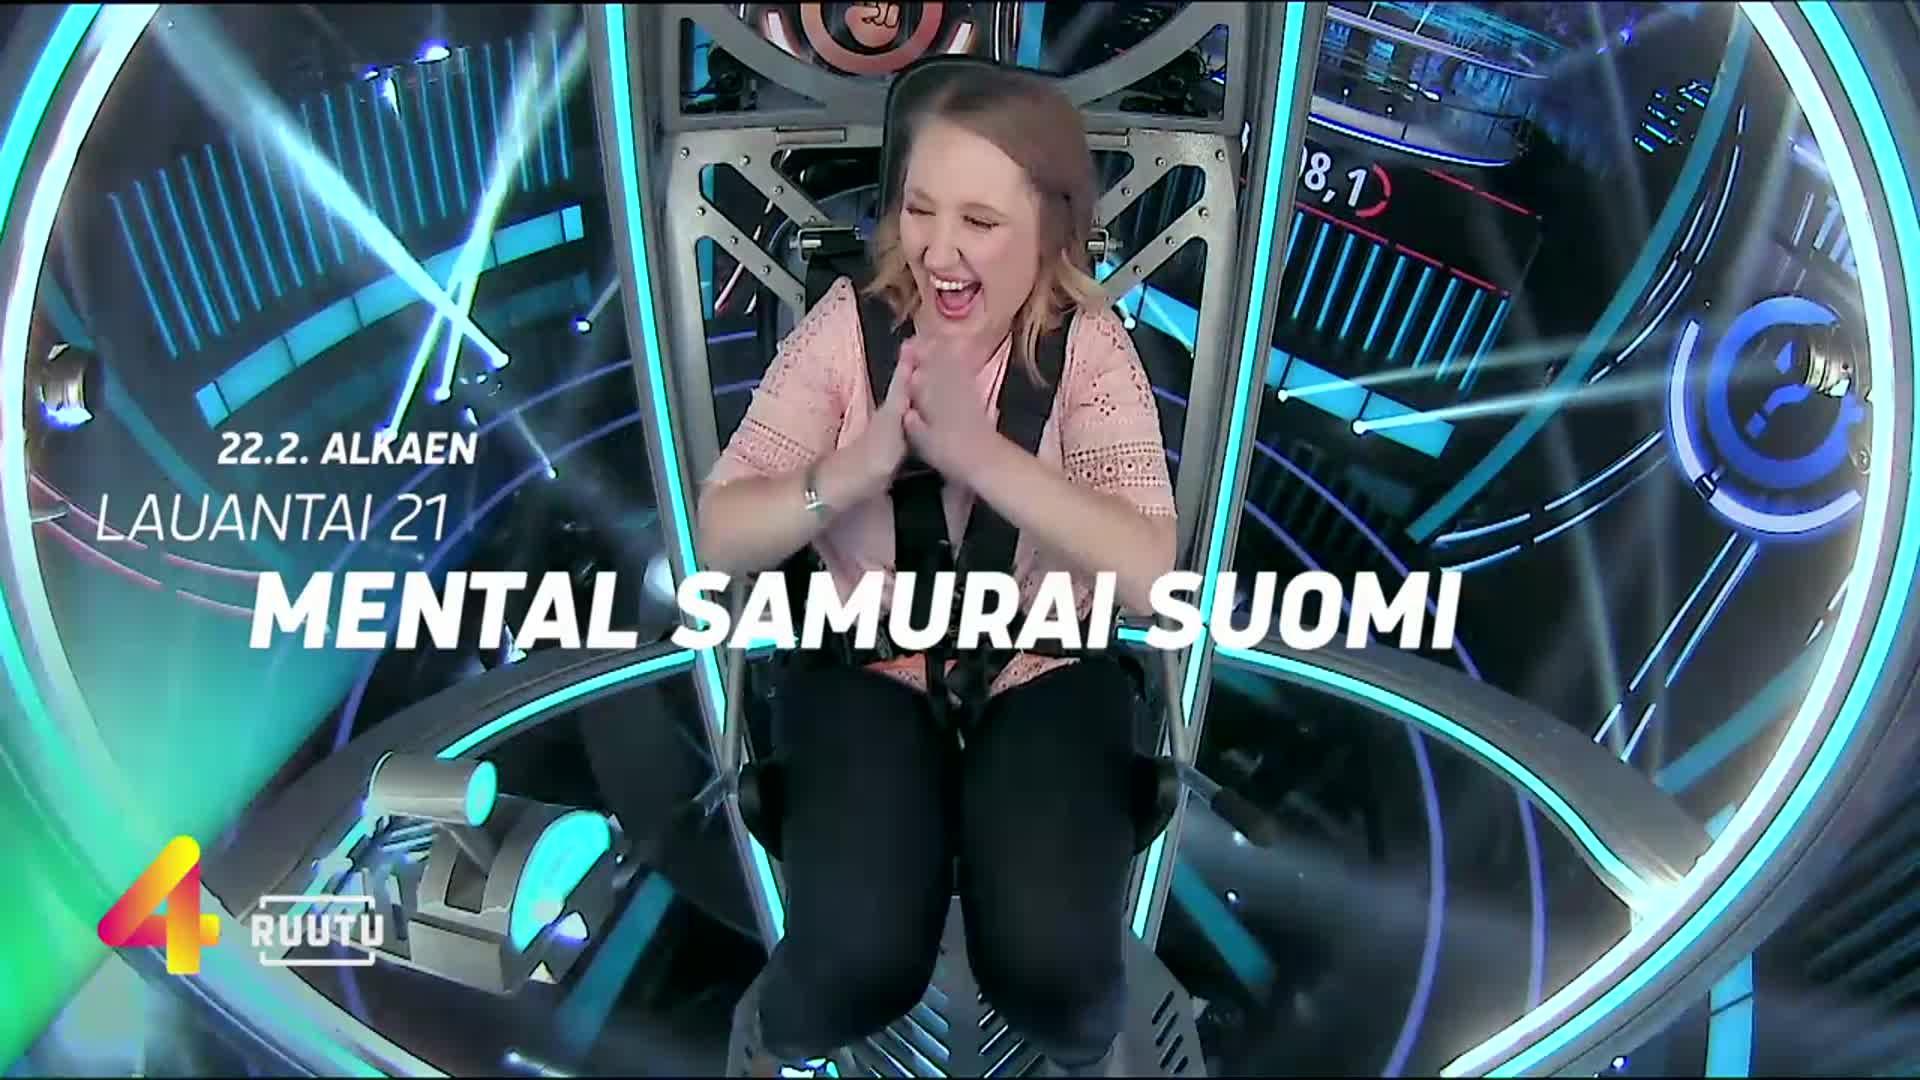 Mental Samurai Suomi